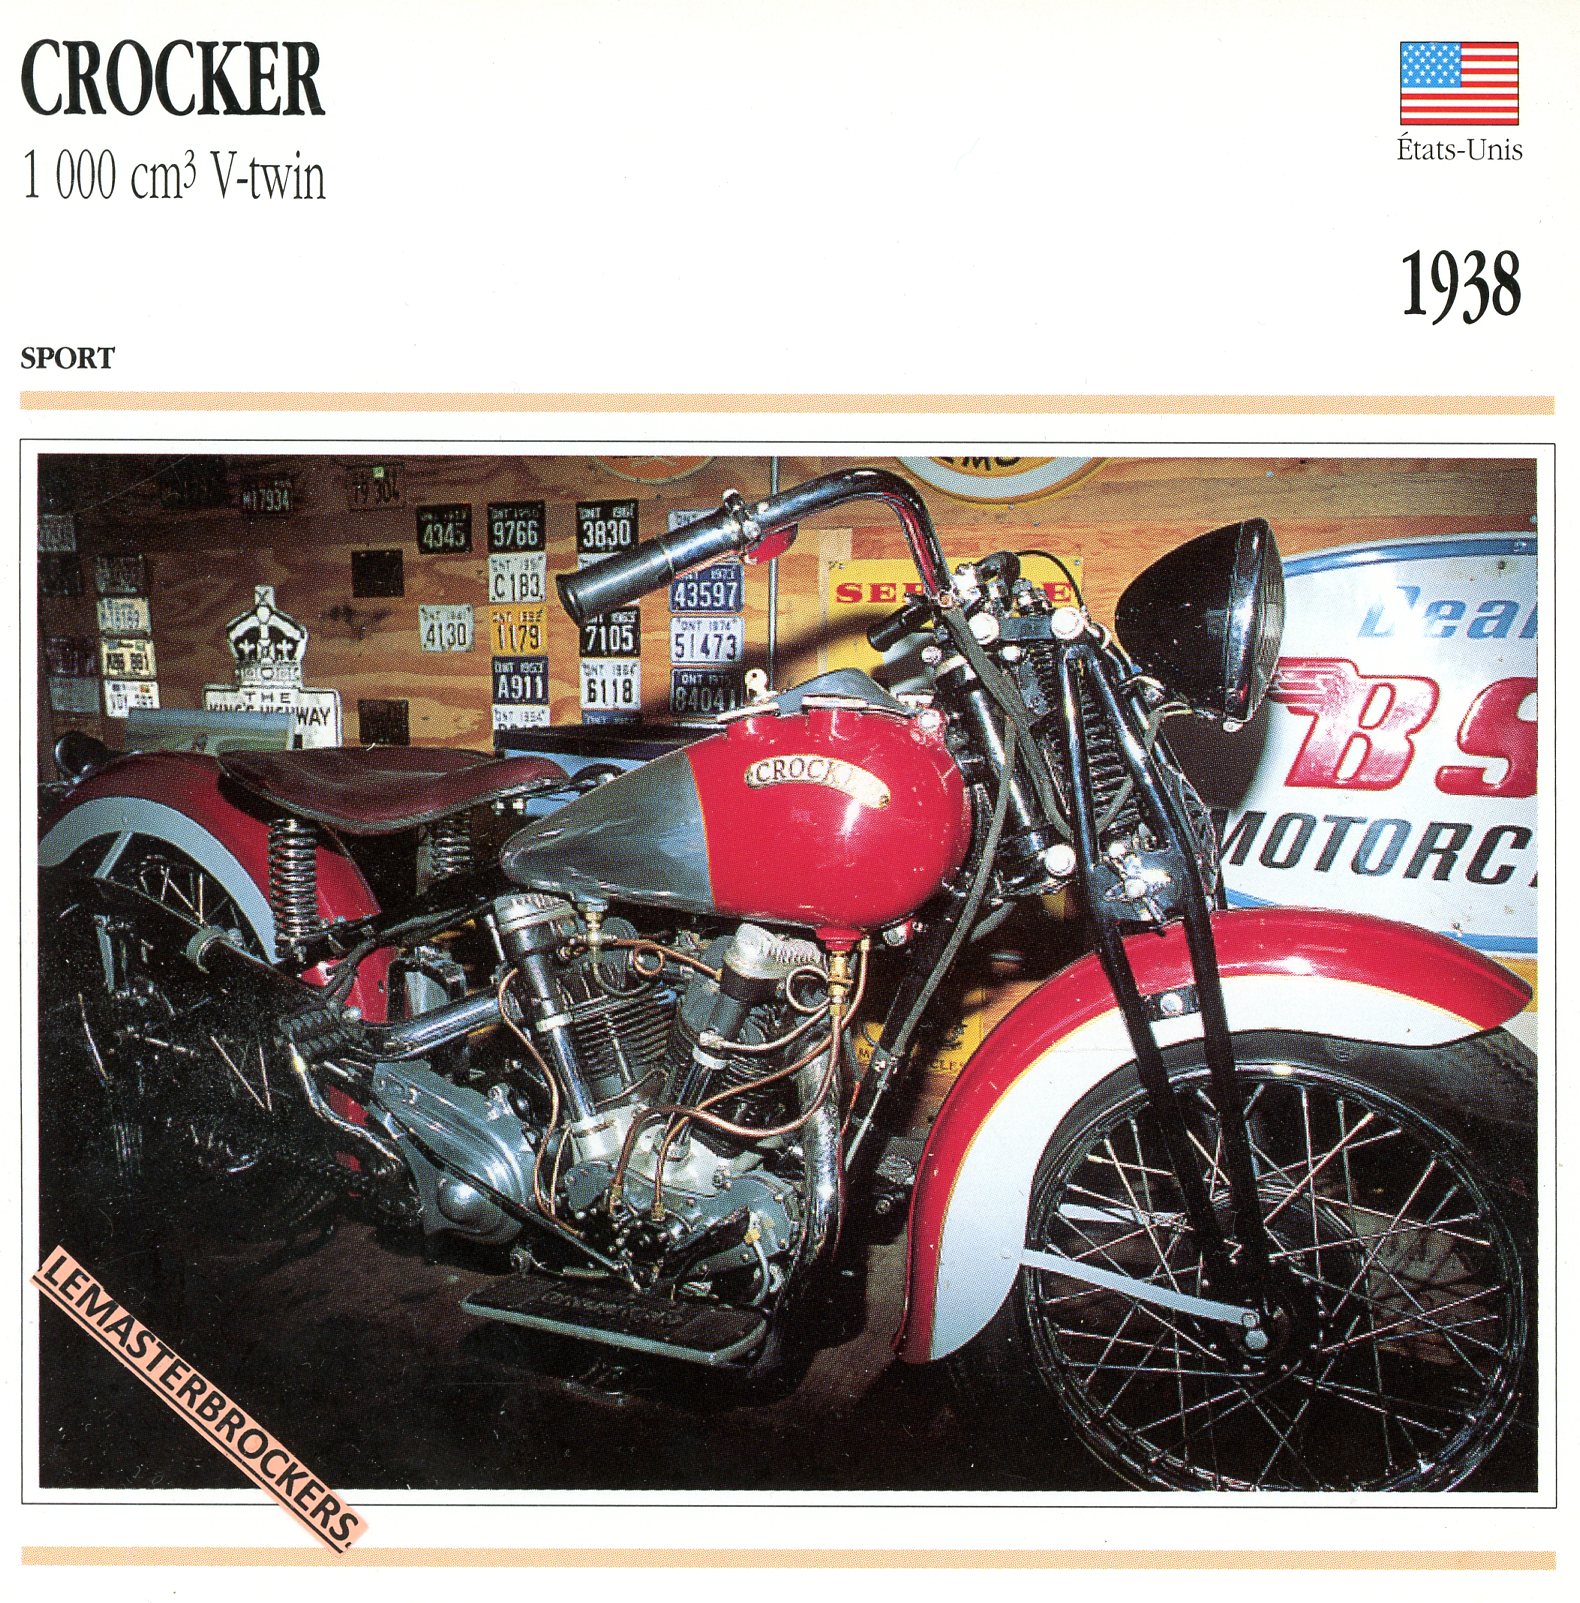 CROCKER-1000-VTWIN-1938-FICHE-MOTO-ATLAS-lemasterbrockers-CARD-MOTORCYCLE